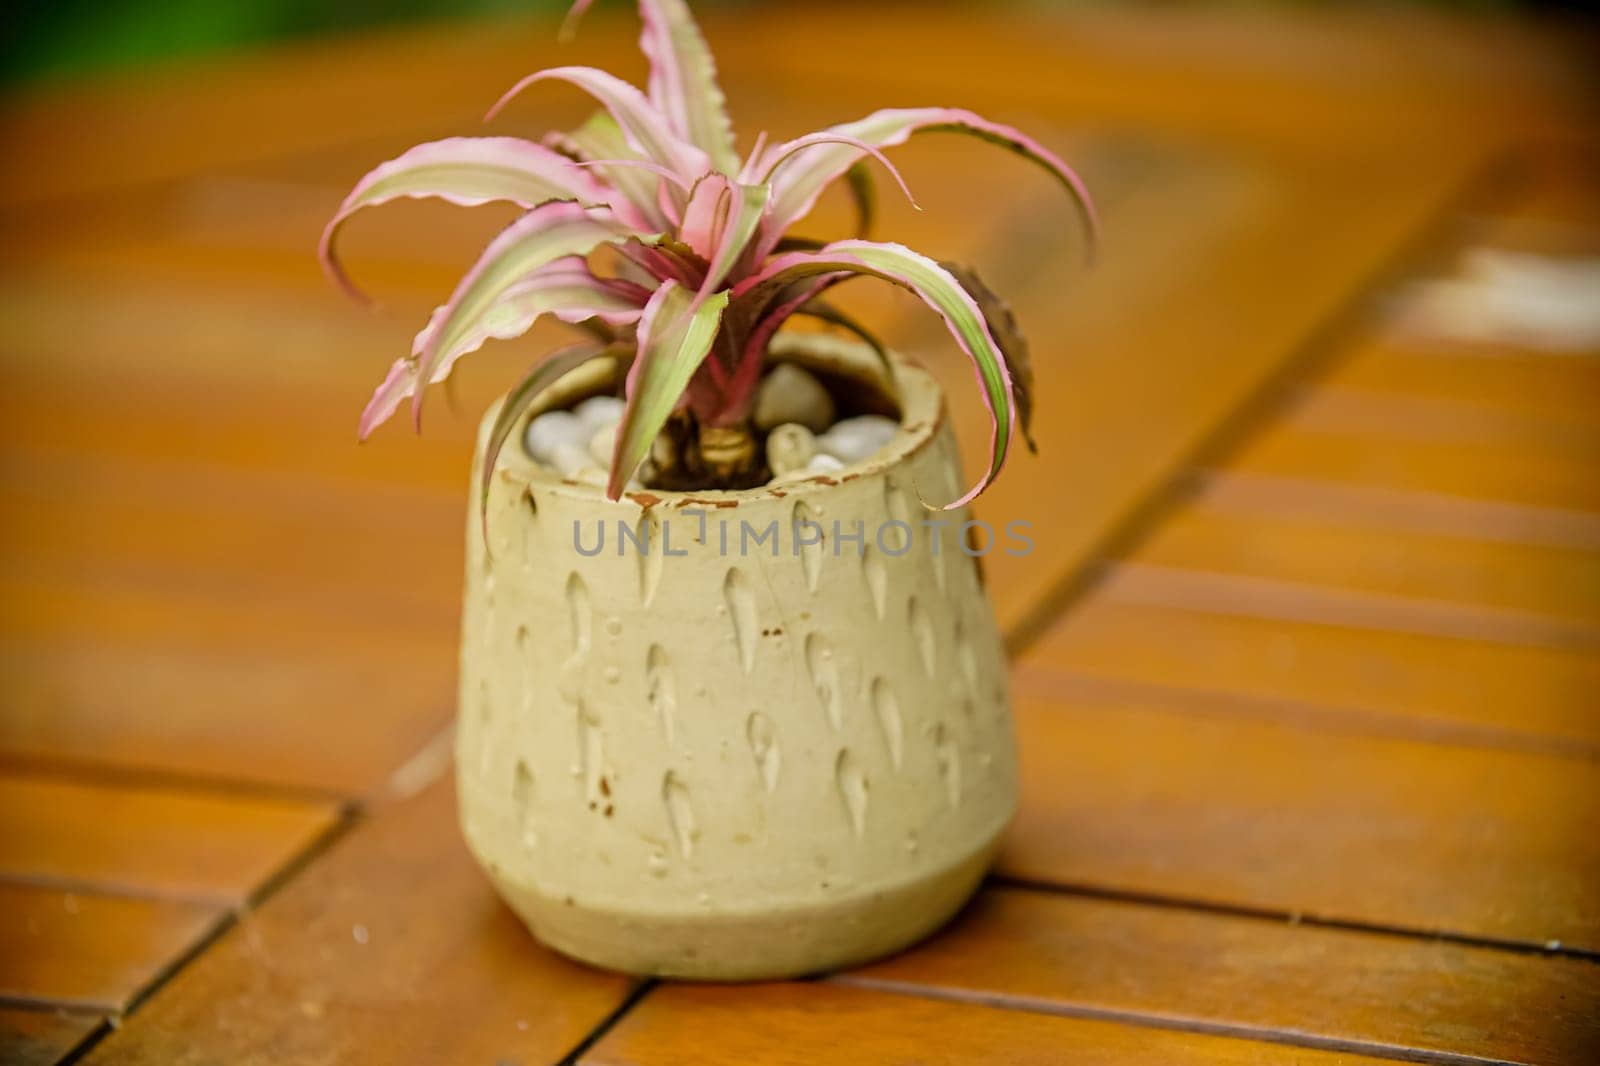 Beautiful decoration Plant in small pot. Green plant in small pot placed as room decorations and interior decor. by antoksena